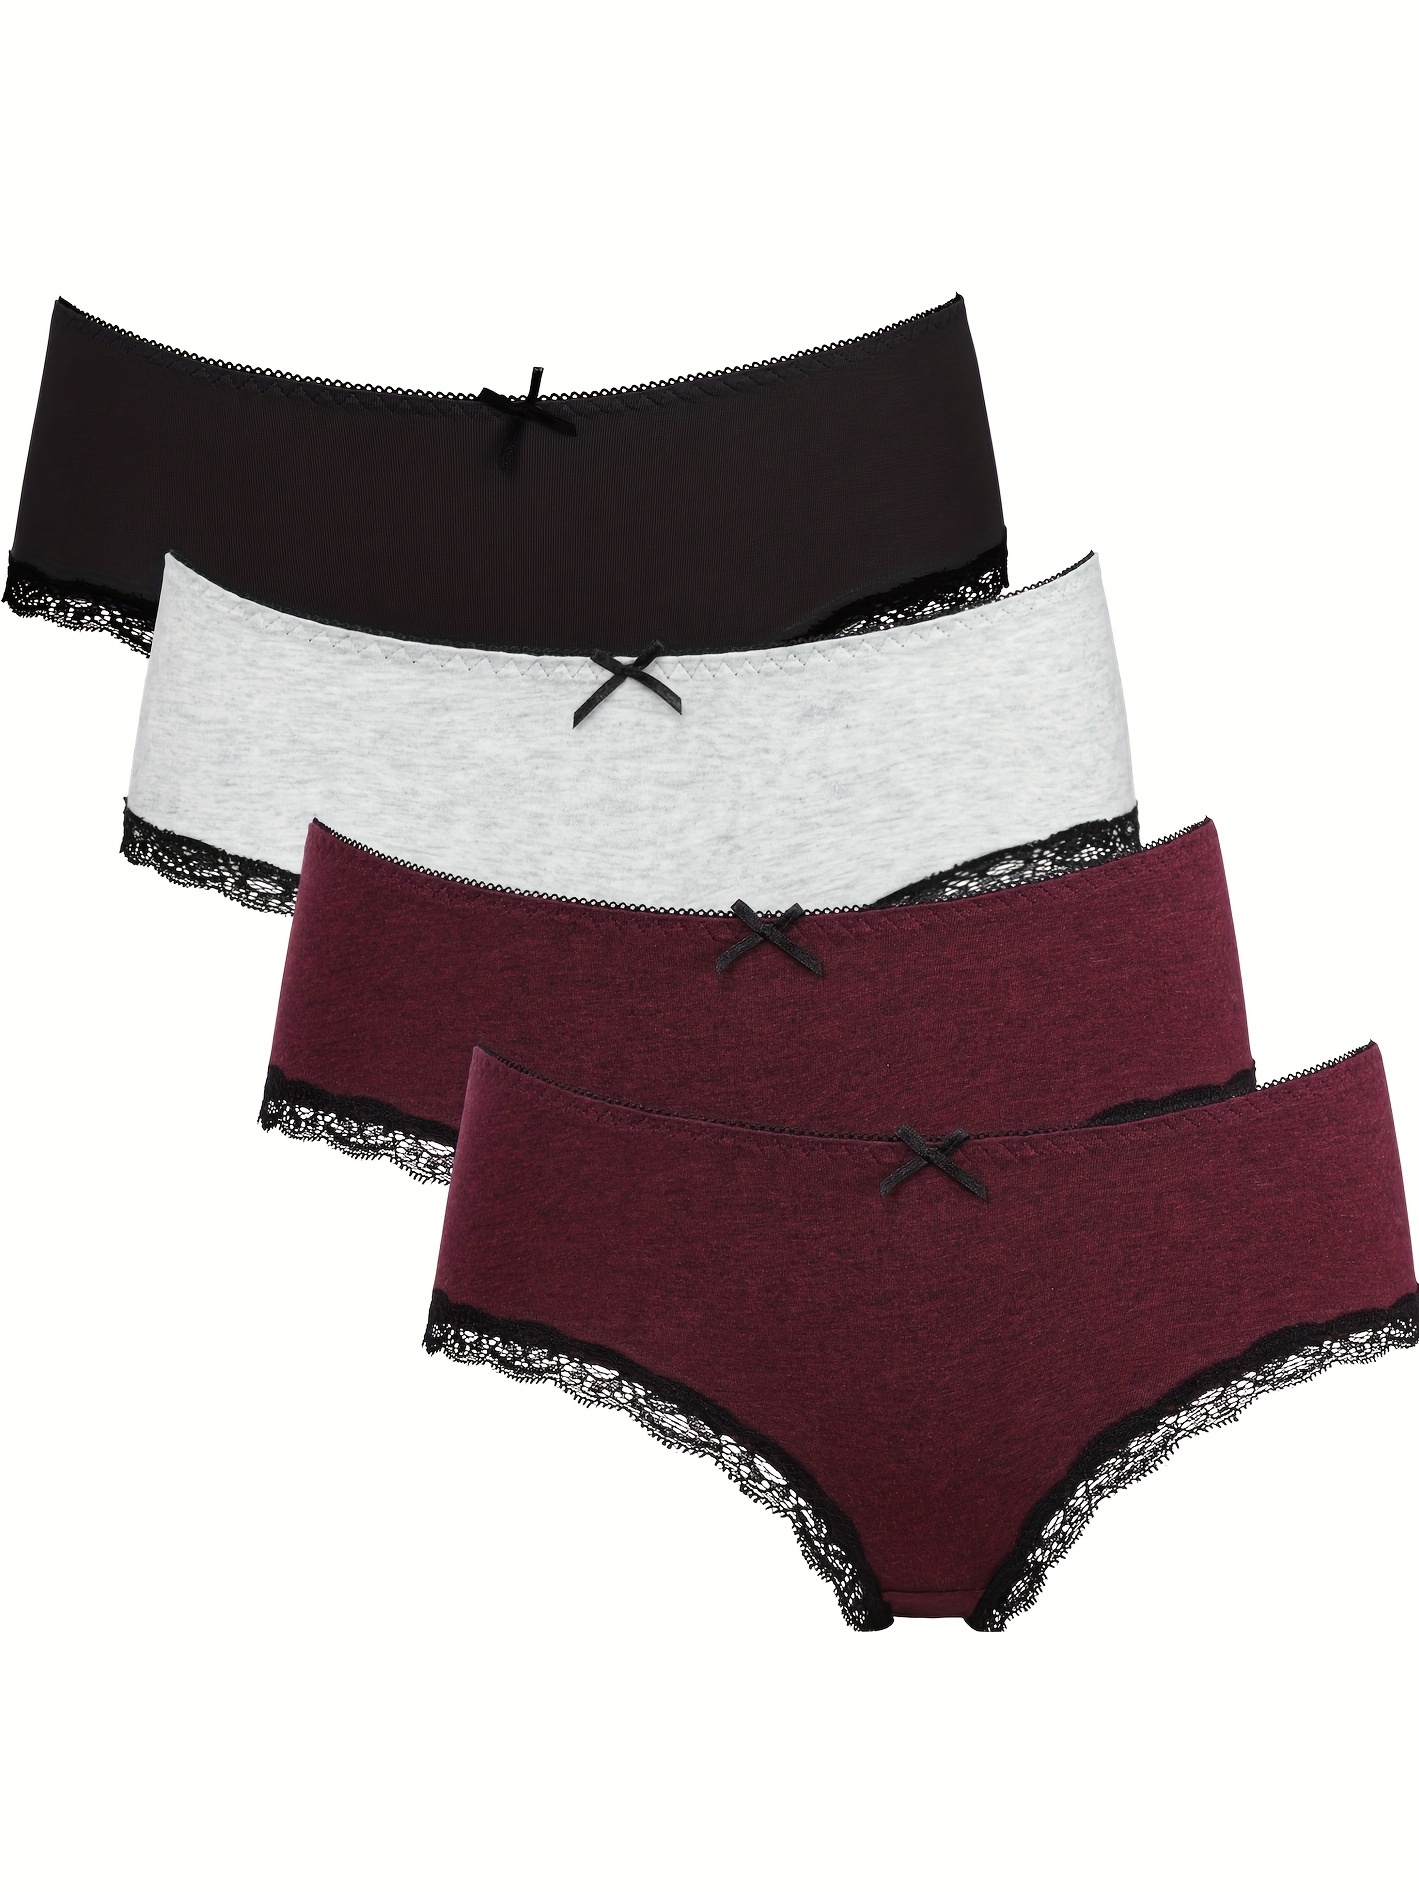 Women Underpants Lace Cotton 4PCS Soft Hollow Brief Panty Hipster Underwear